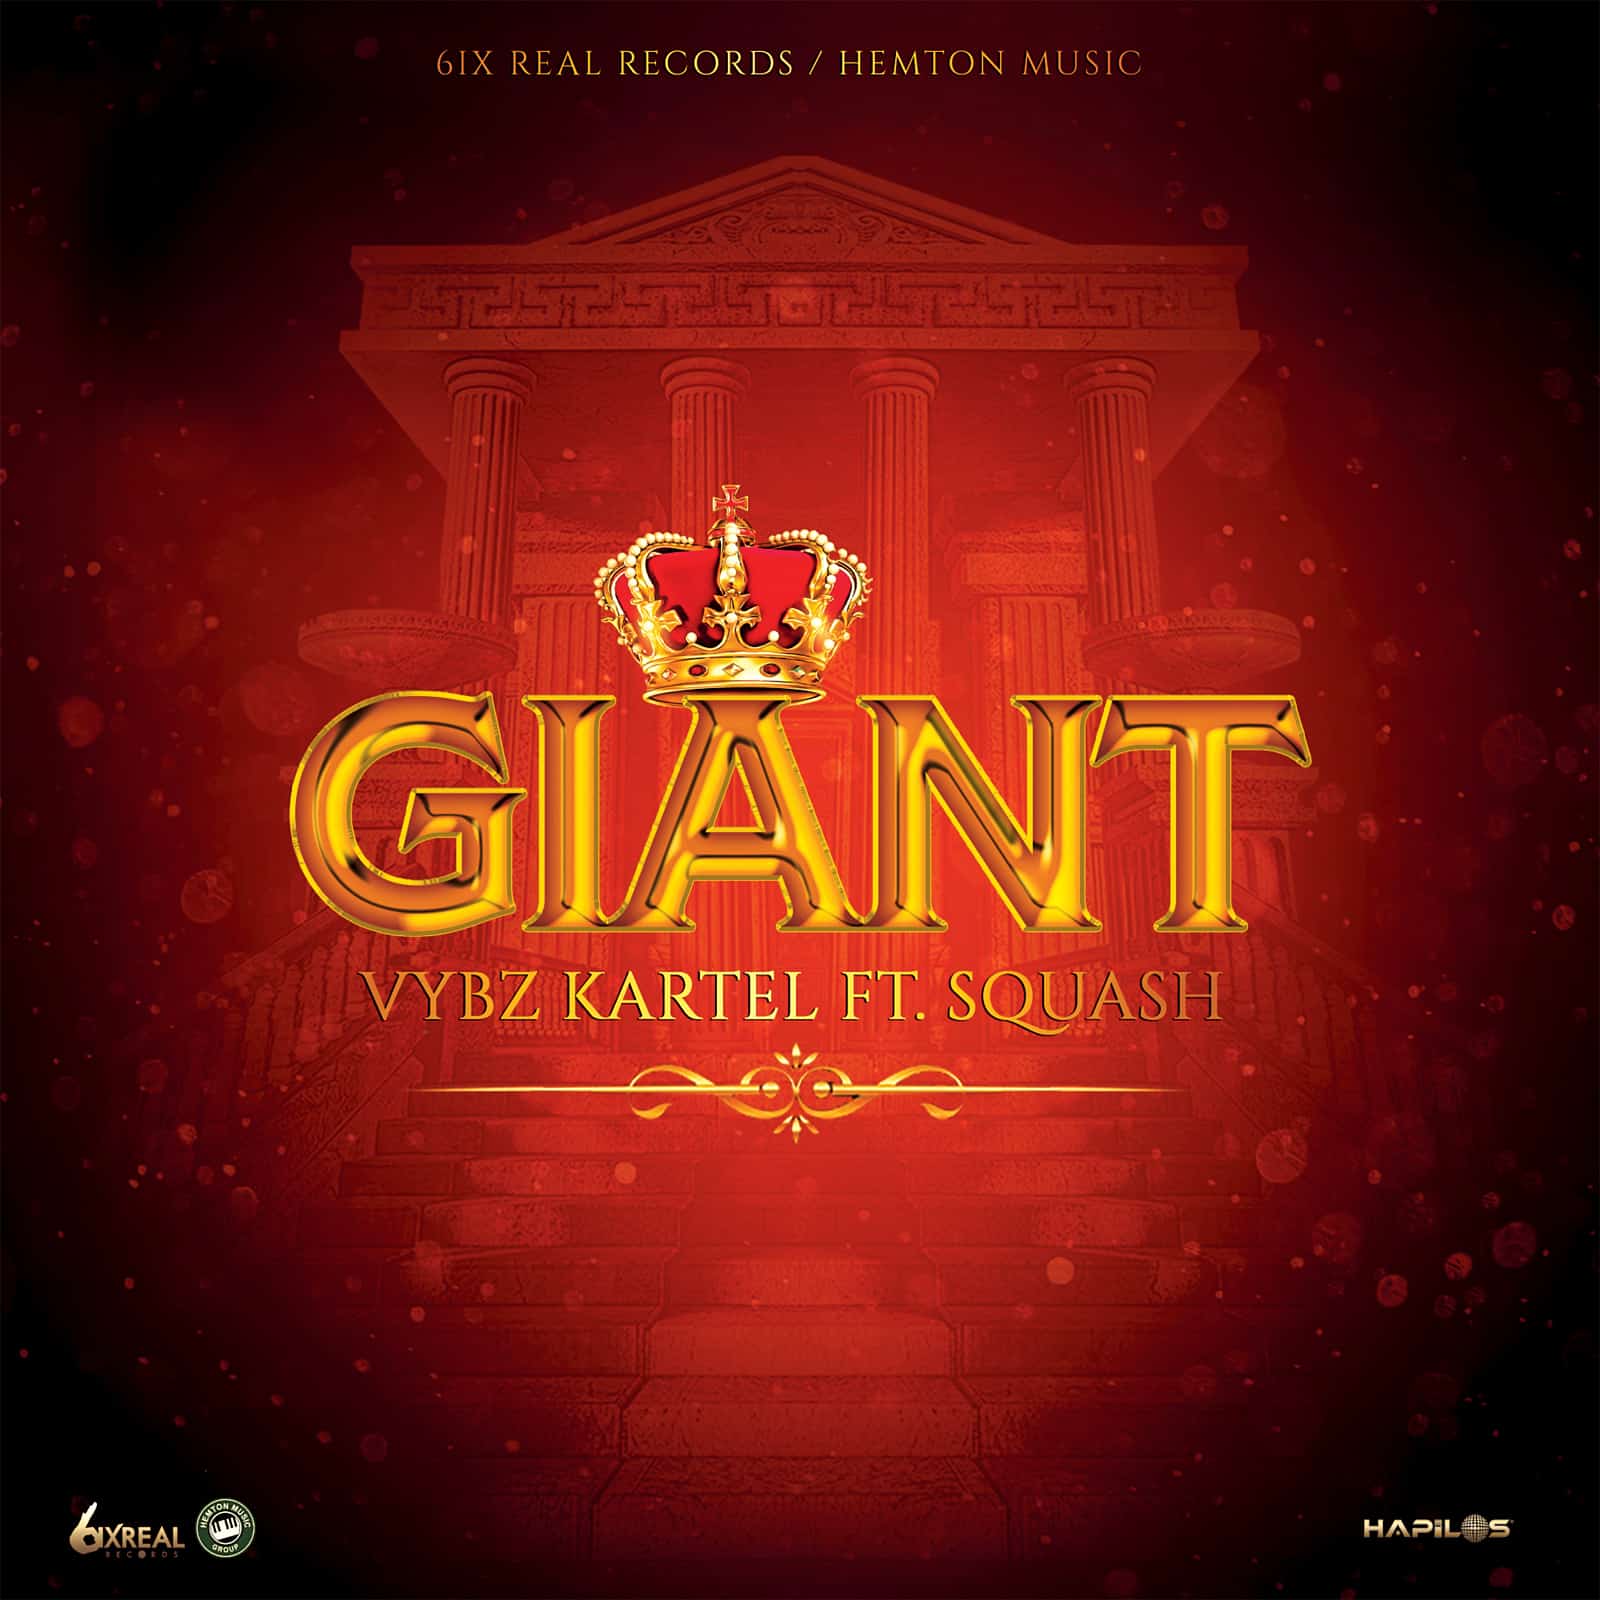 Vybz Kartel - Giant (feat. SQUASH) - 6ix Real Records / Hemton Music